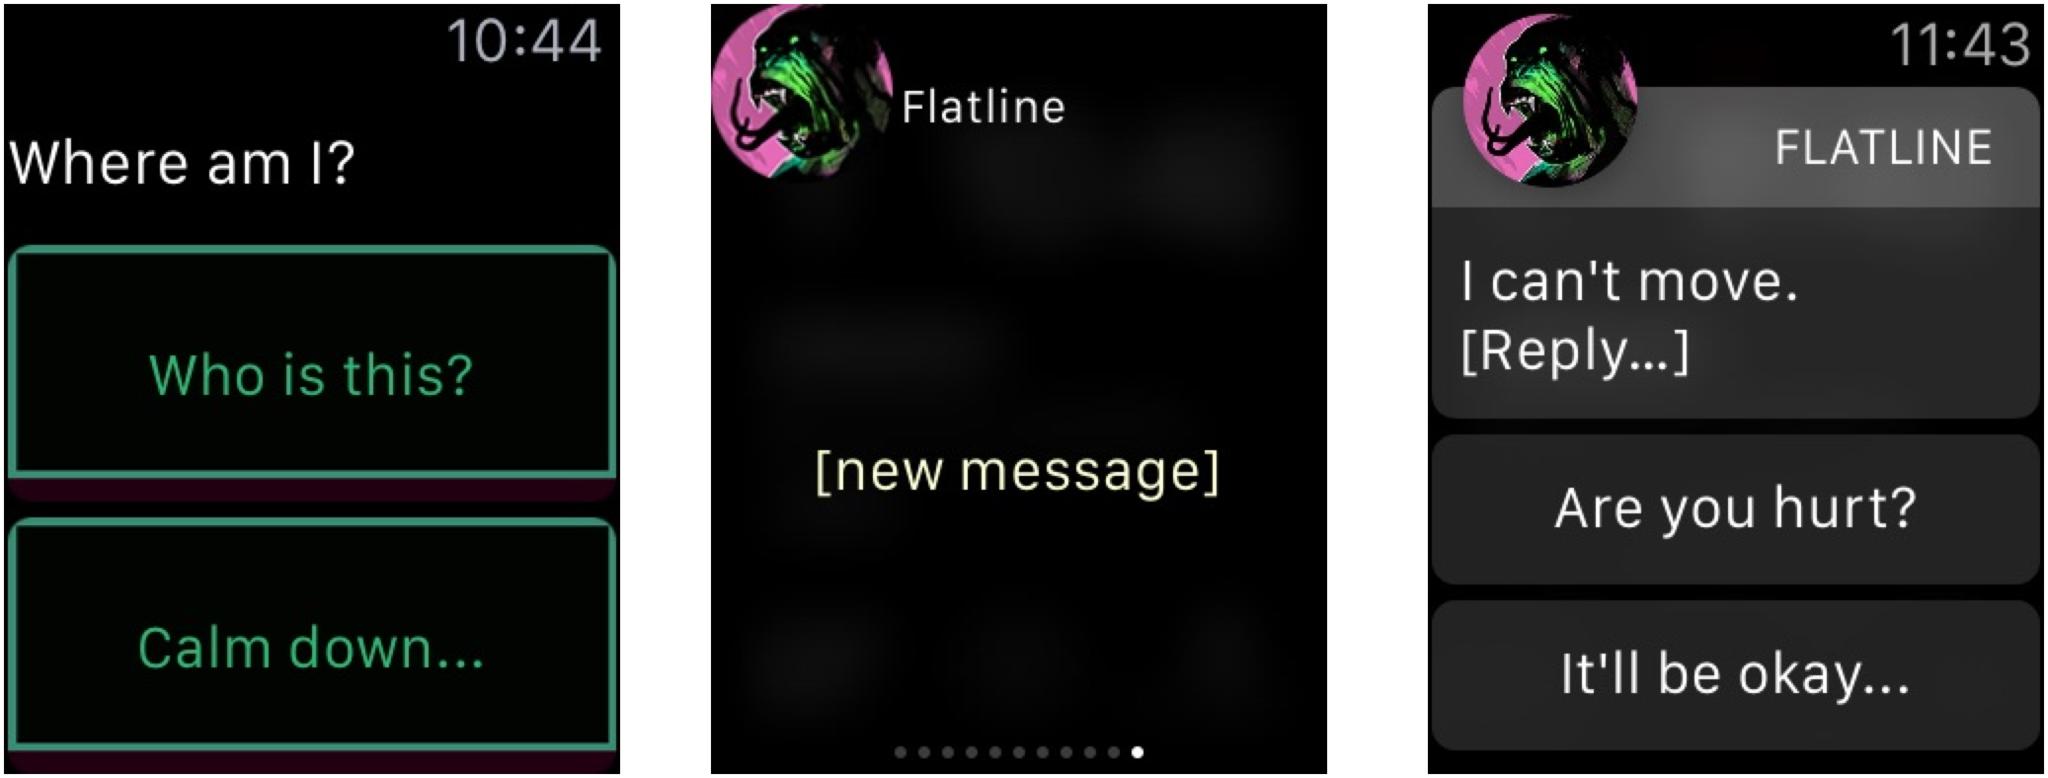 Lifeline Flatline Screens